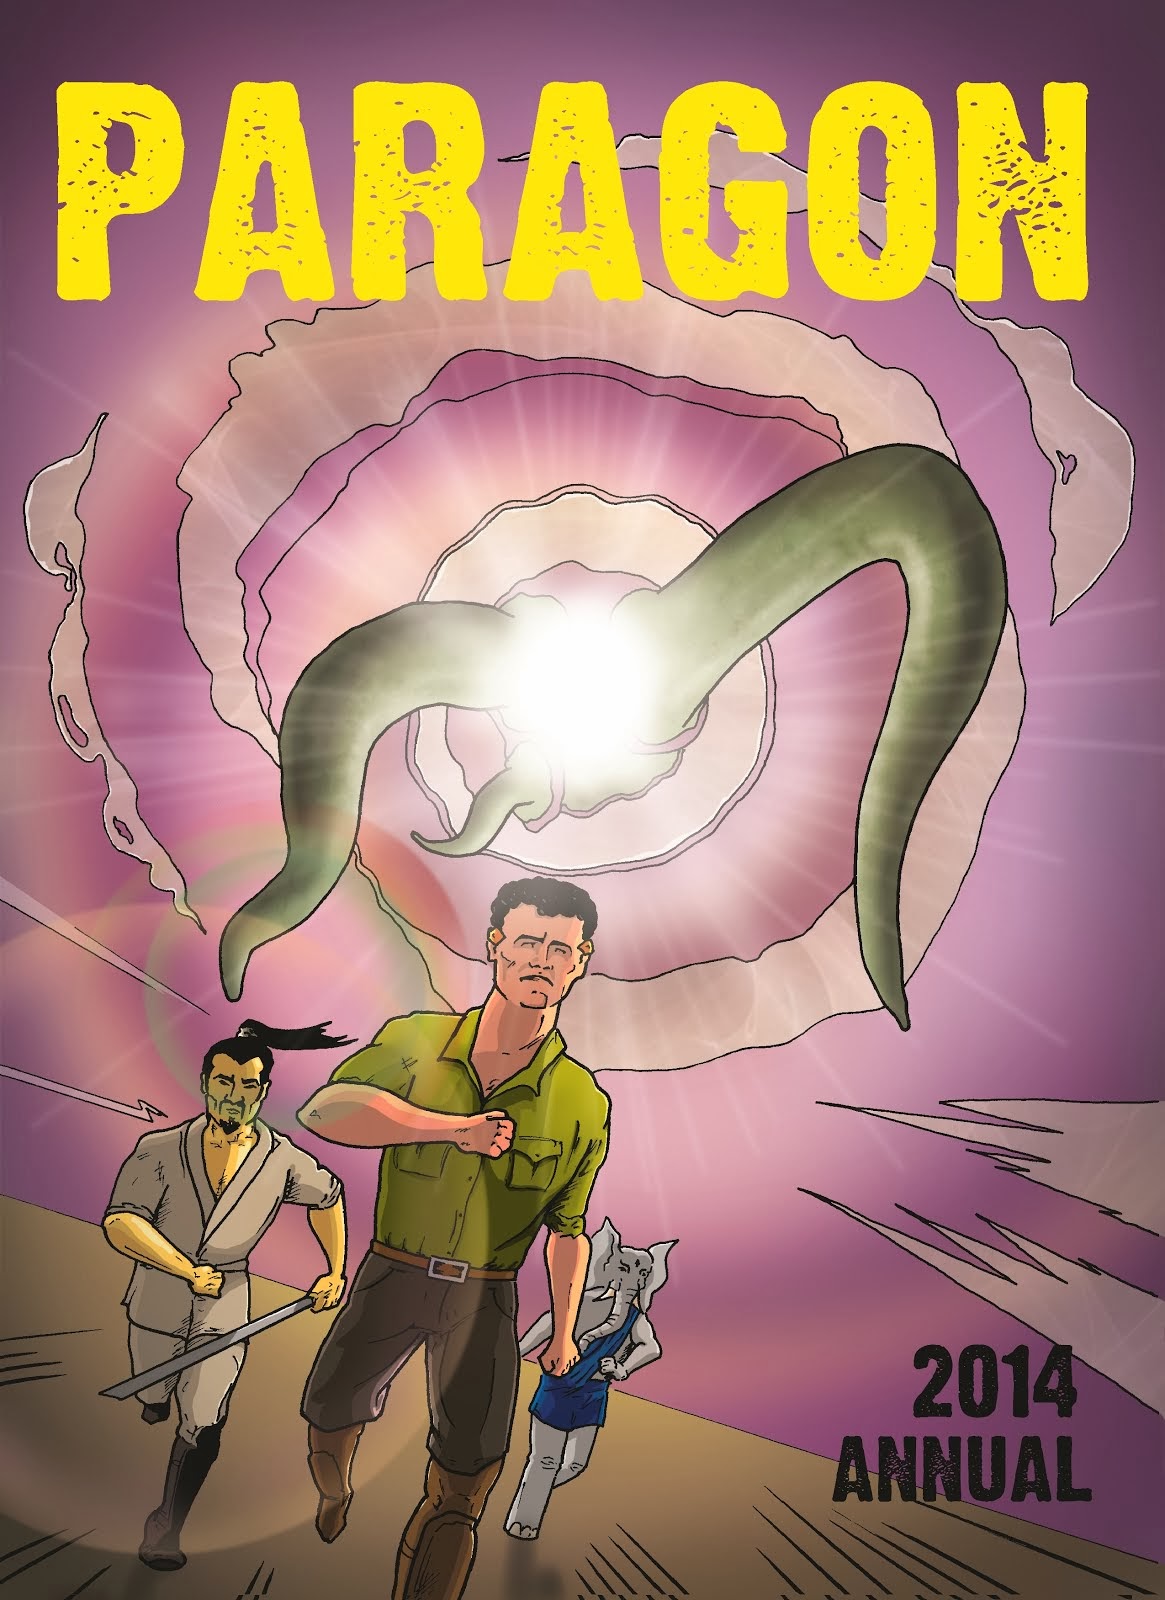 The PARAGON Annual 2014